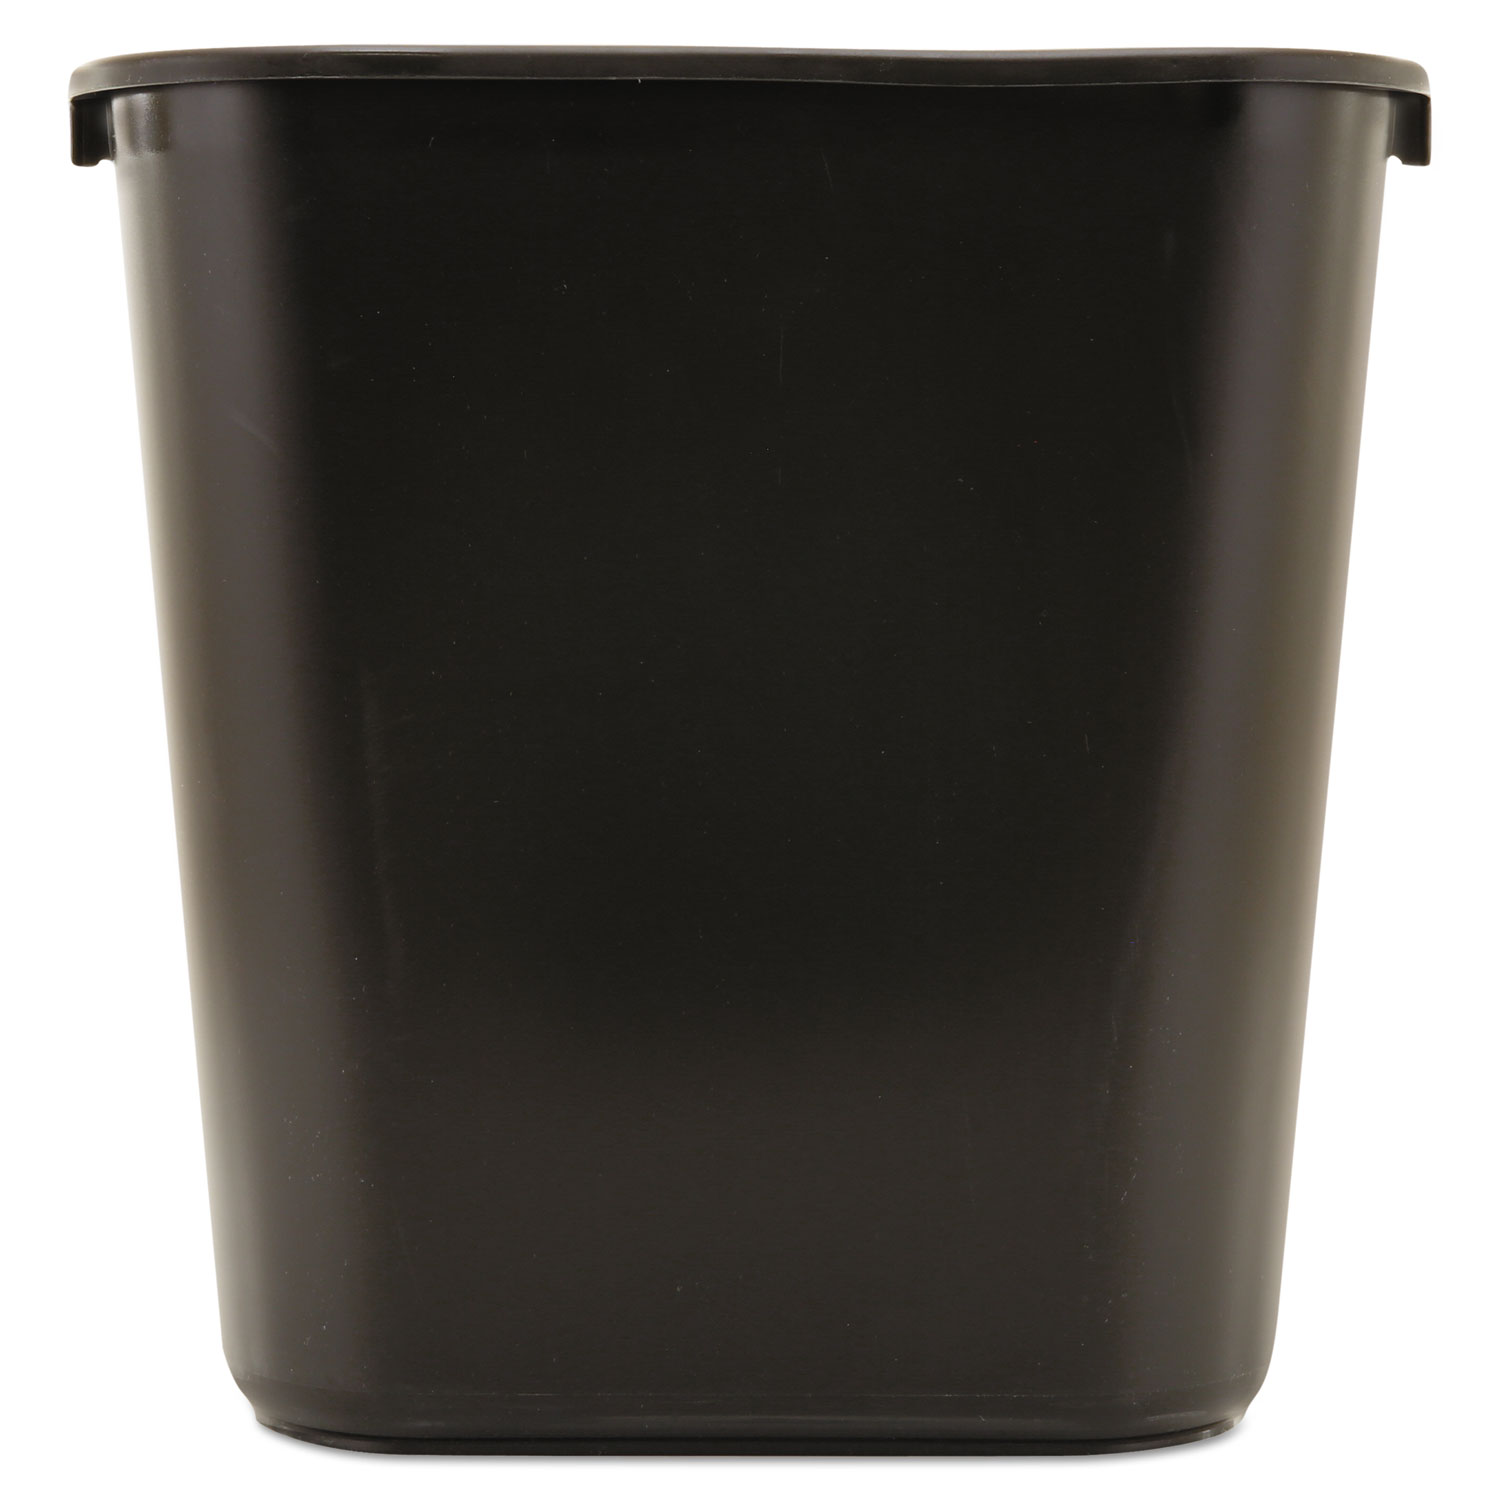 Rubbermaid RCP295600BK Commercial Deskside Plastic Wastebasket, Rectangular, 7 gal, Black